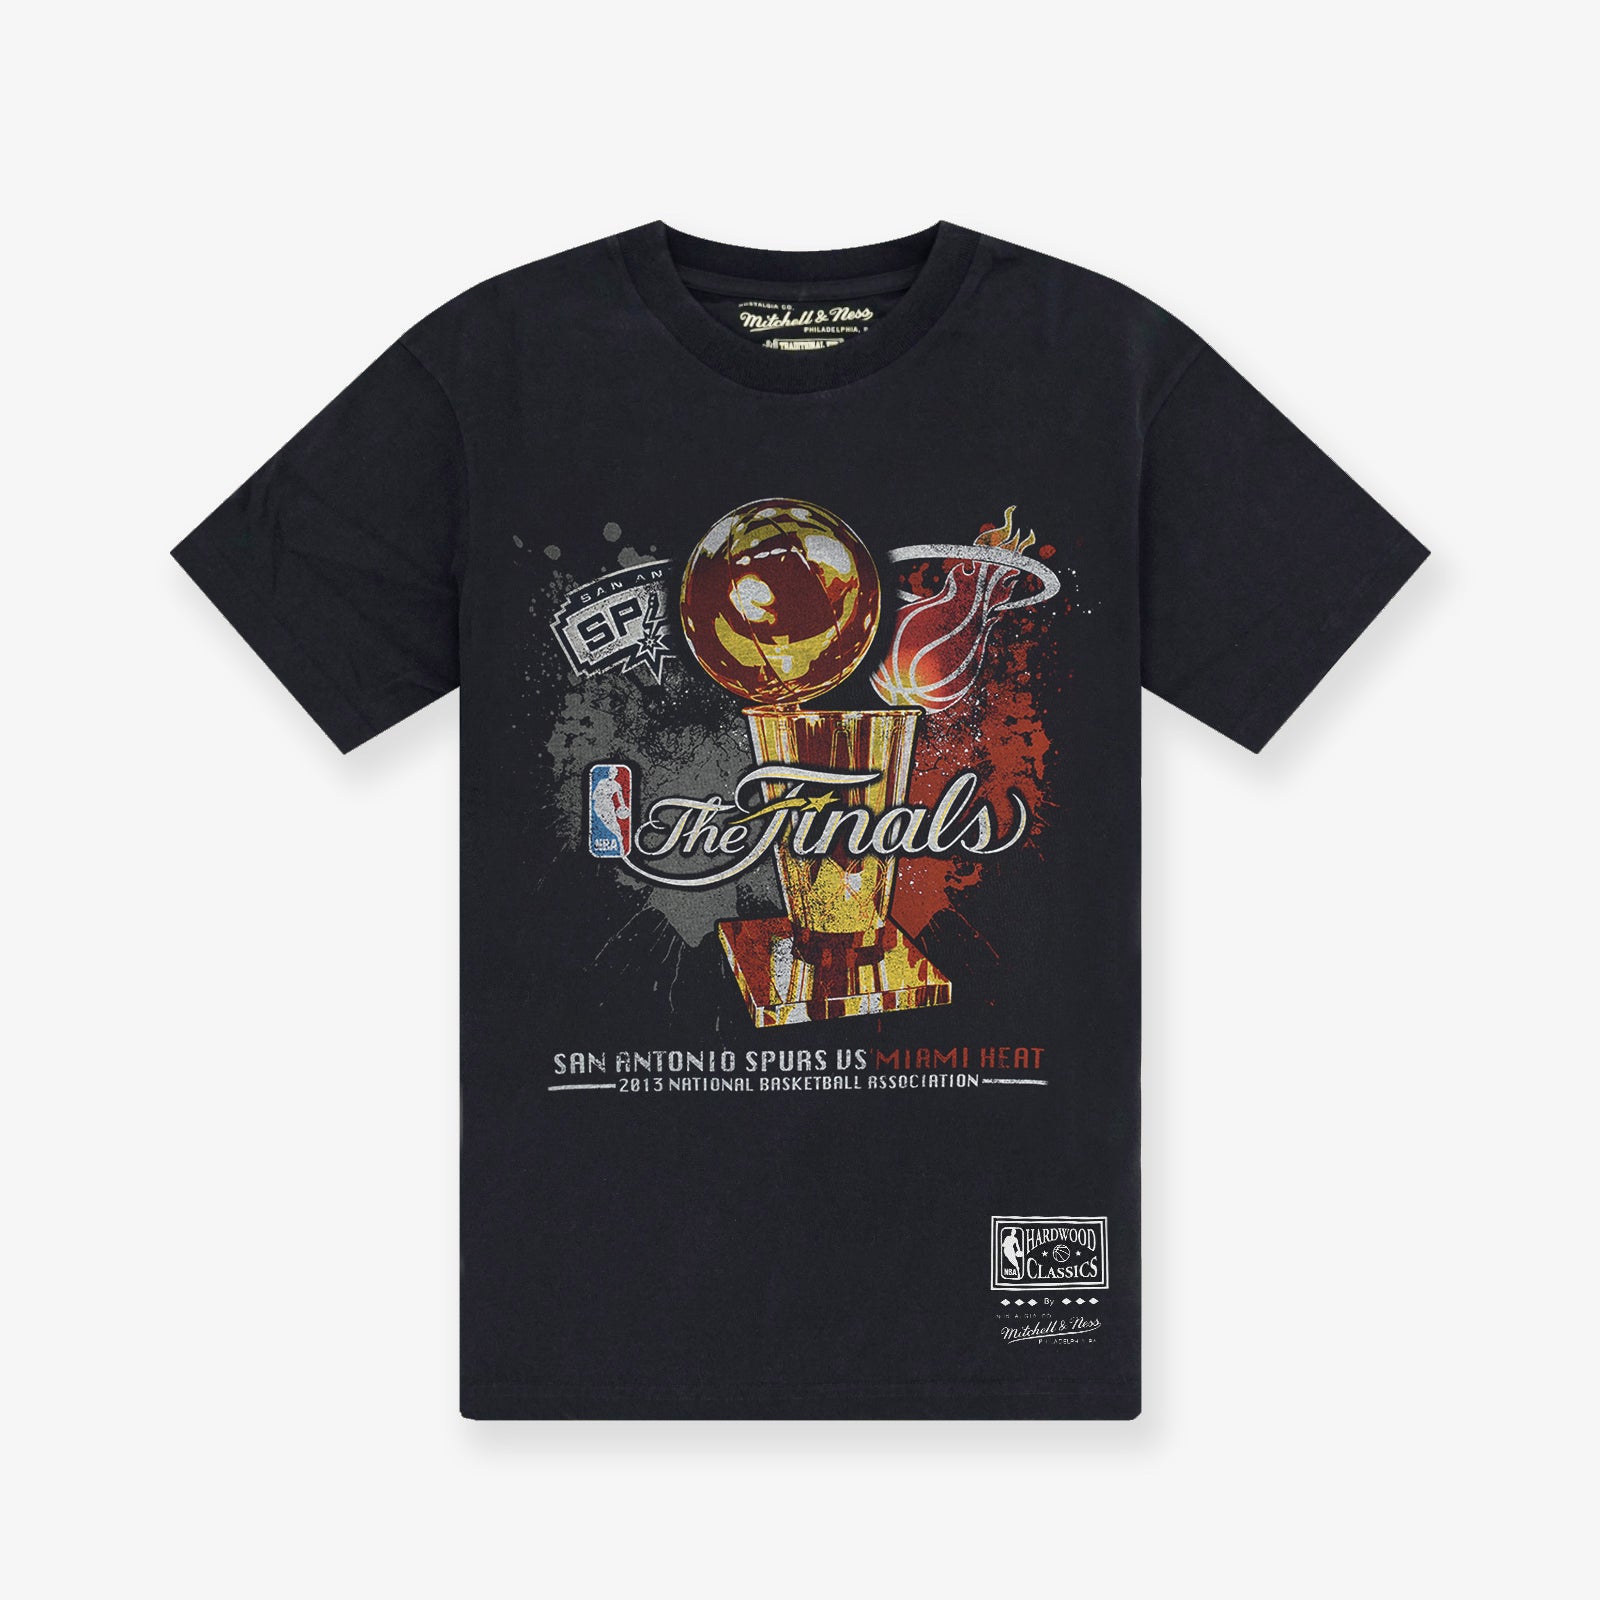 Miami Heat Mitchell & Ness Hardwood Classics Throwback Logo Shirt